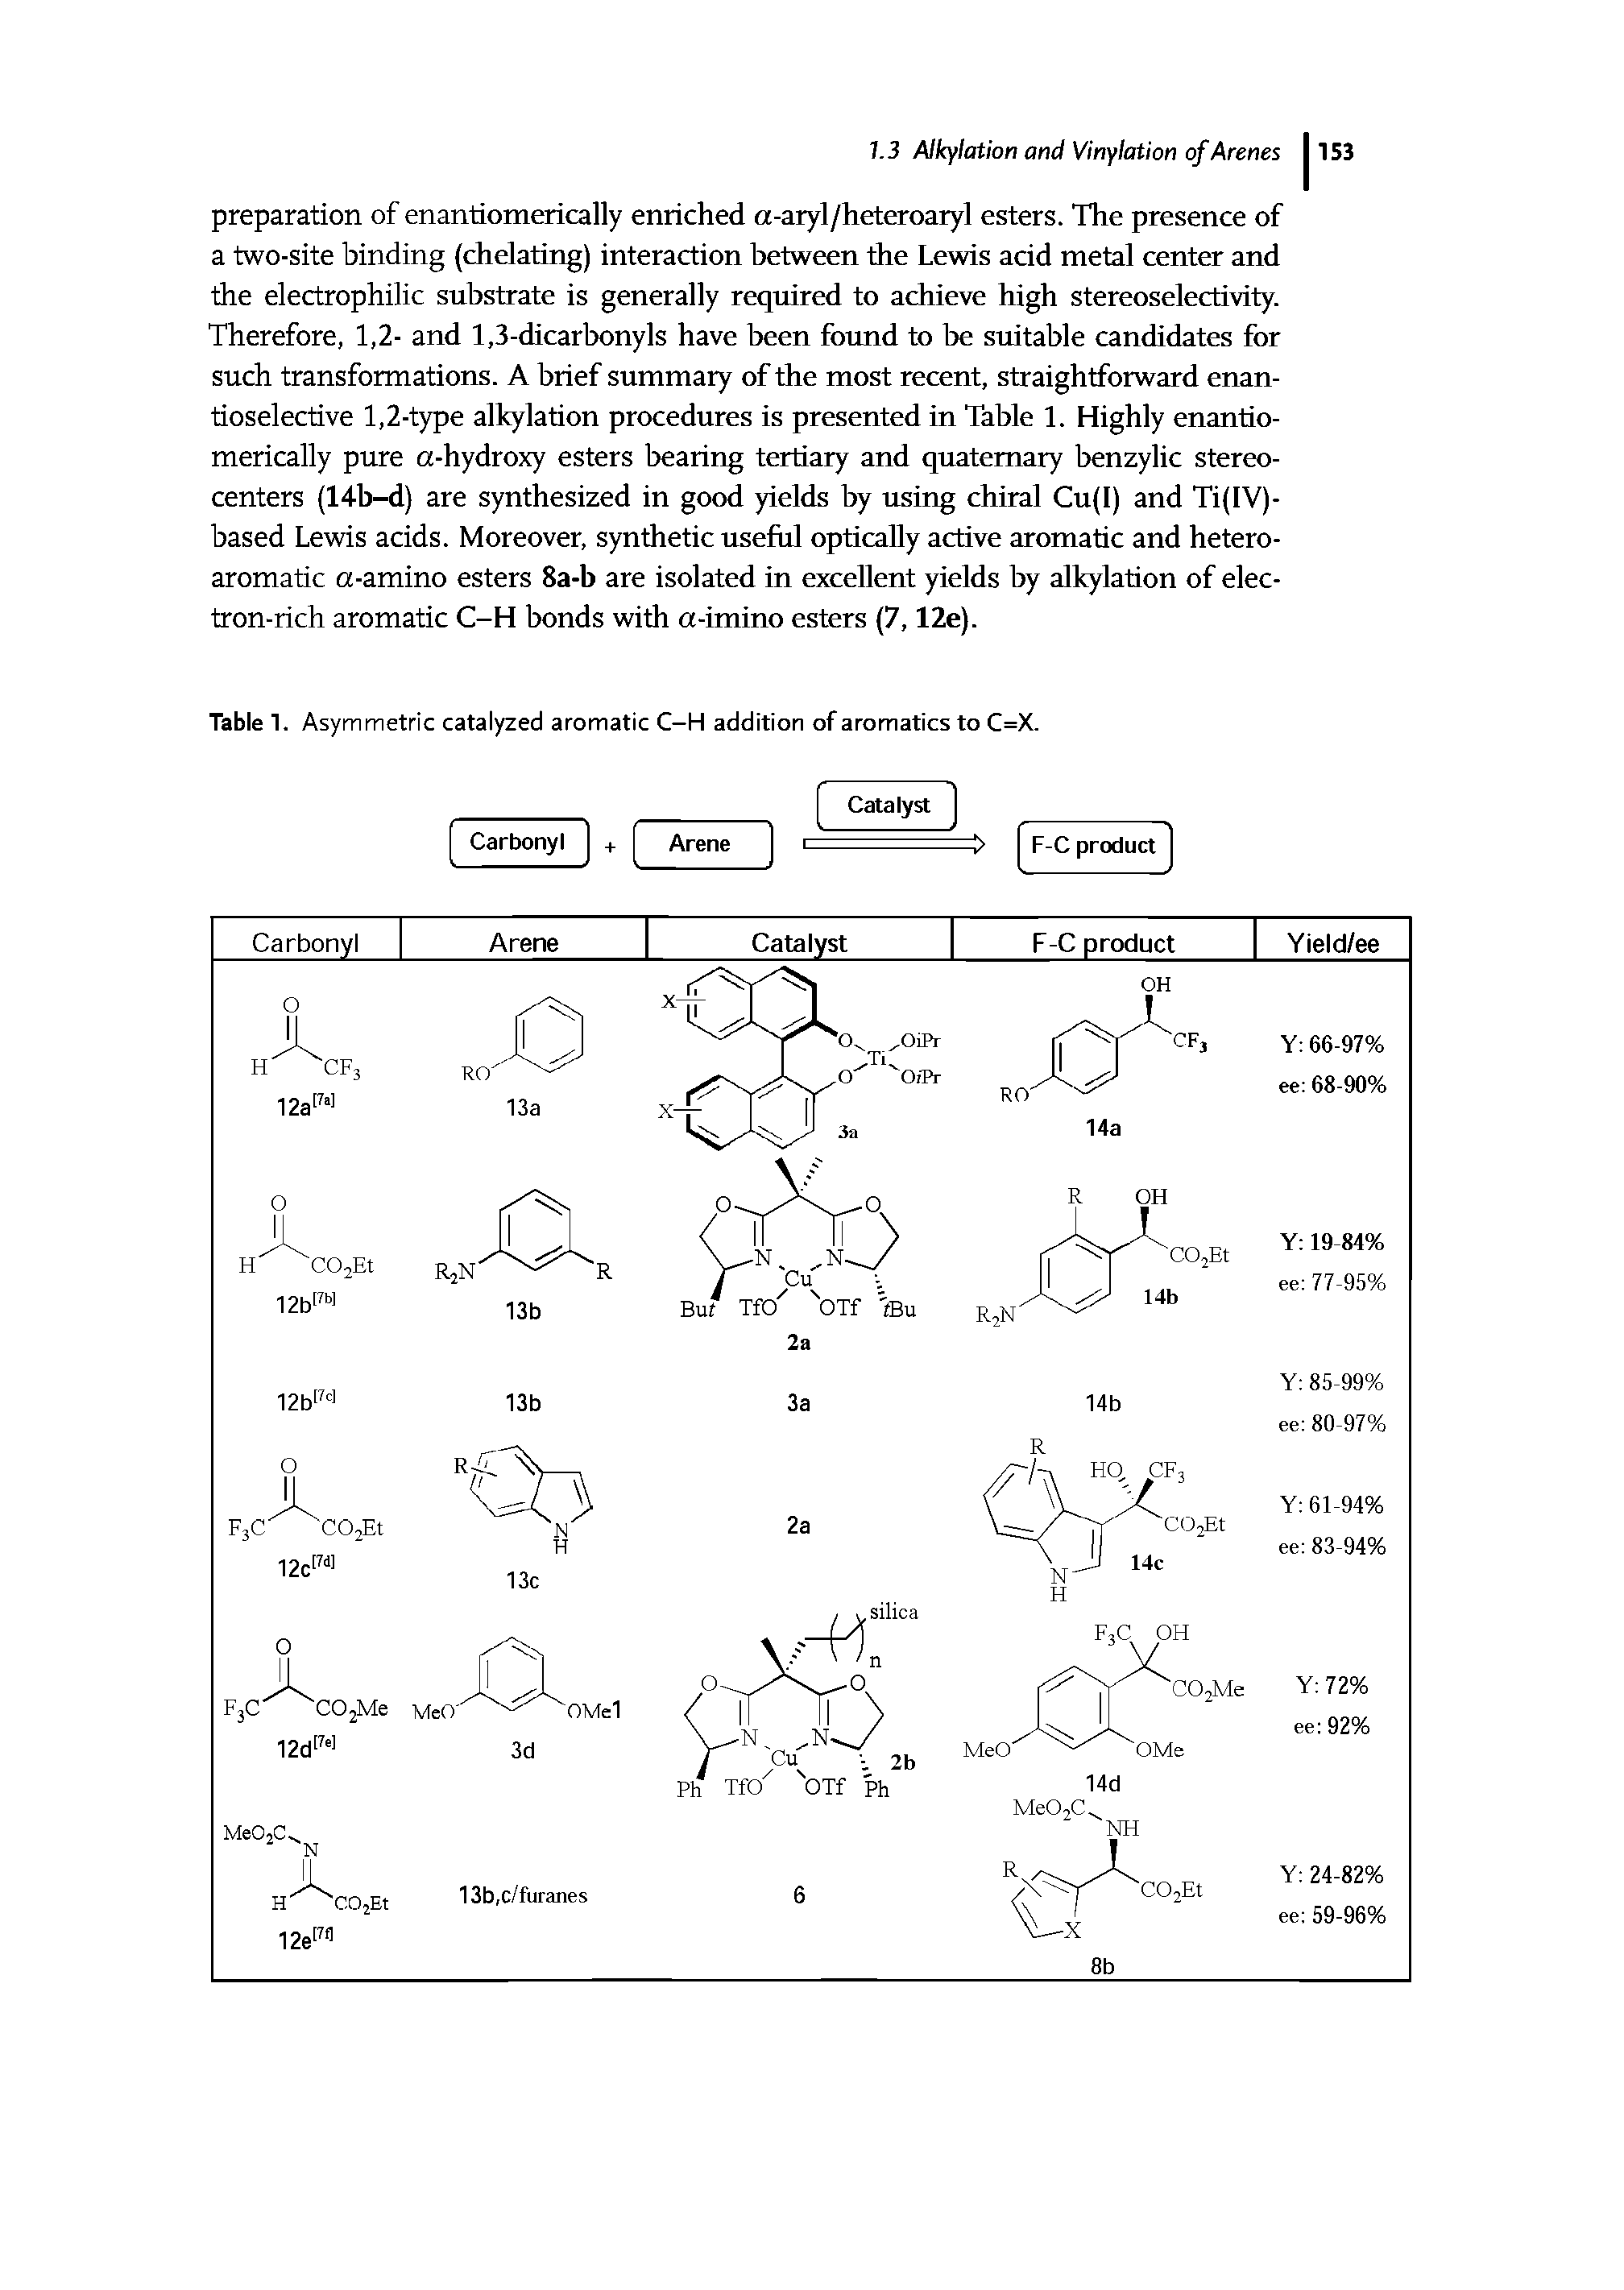 Table 1. Asymmetric catalyzed aromatic C-H addition of aromatics to C=X.